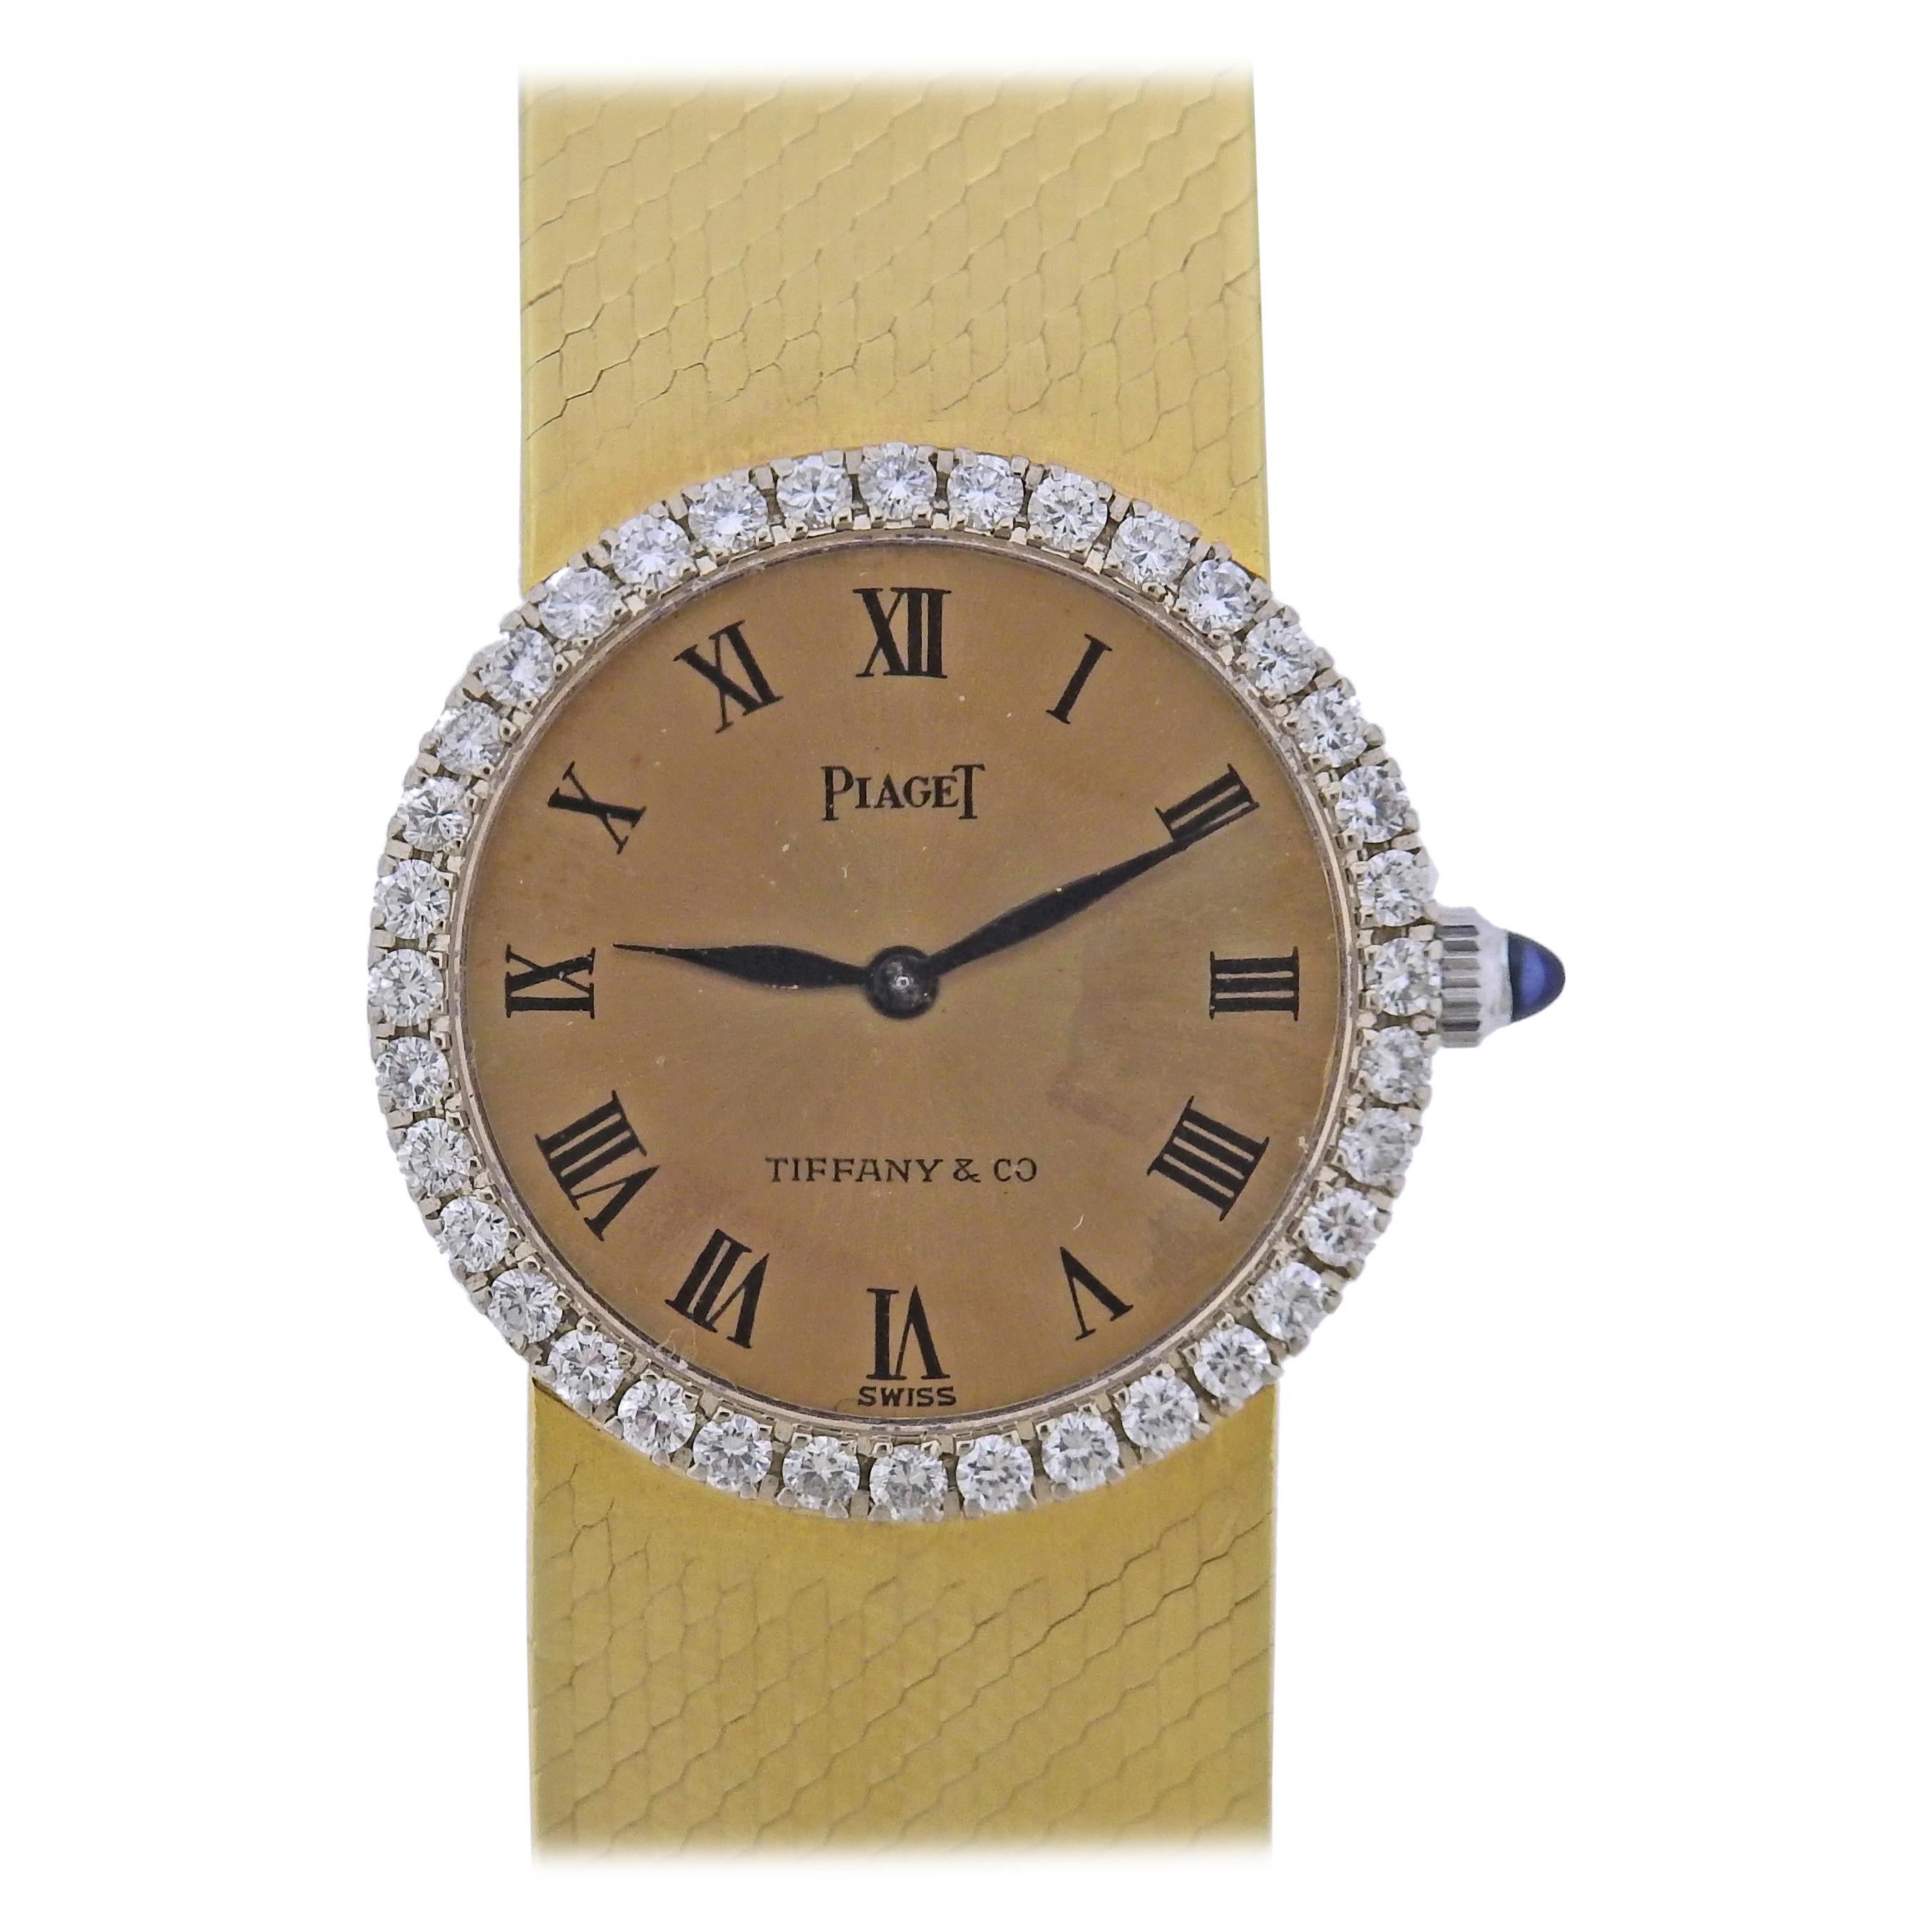 Piaget Tiffany & Co Diamond Gold Watch